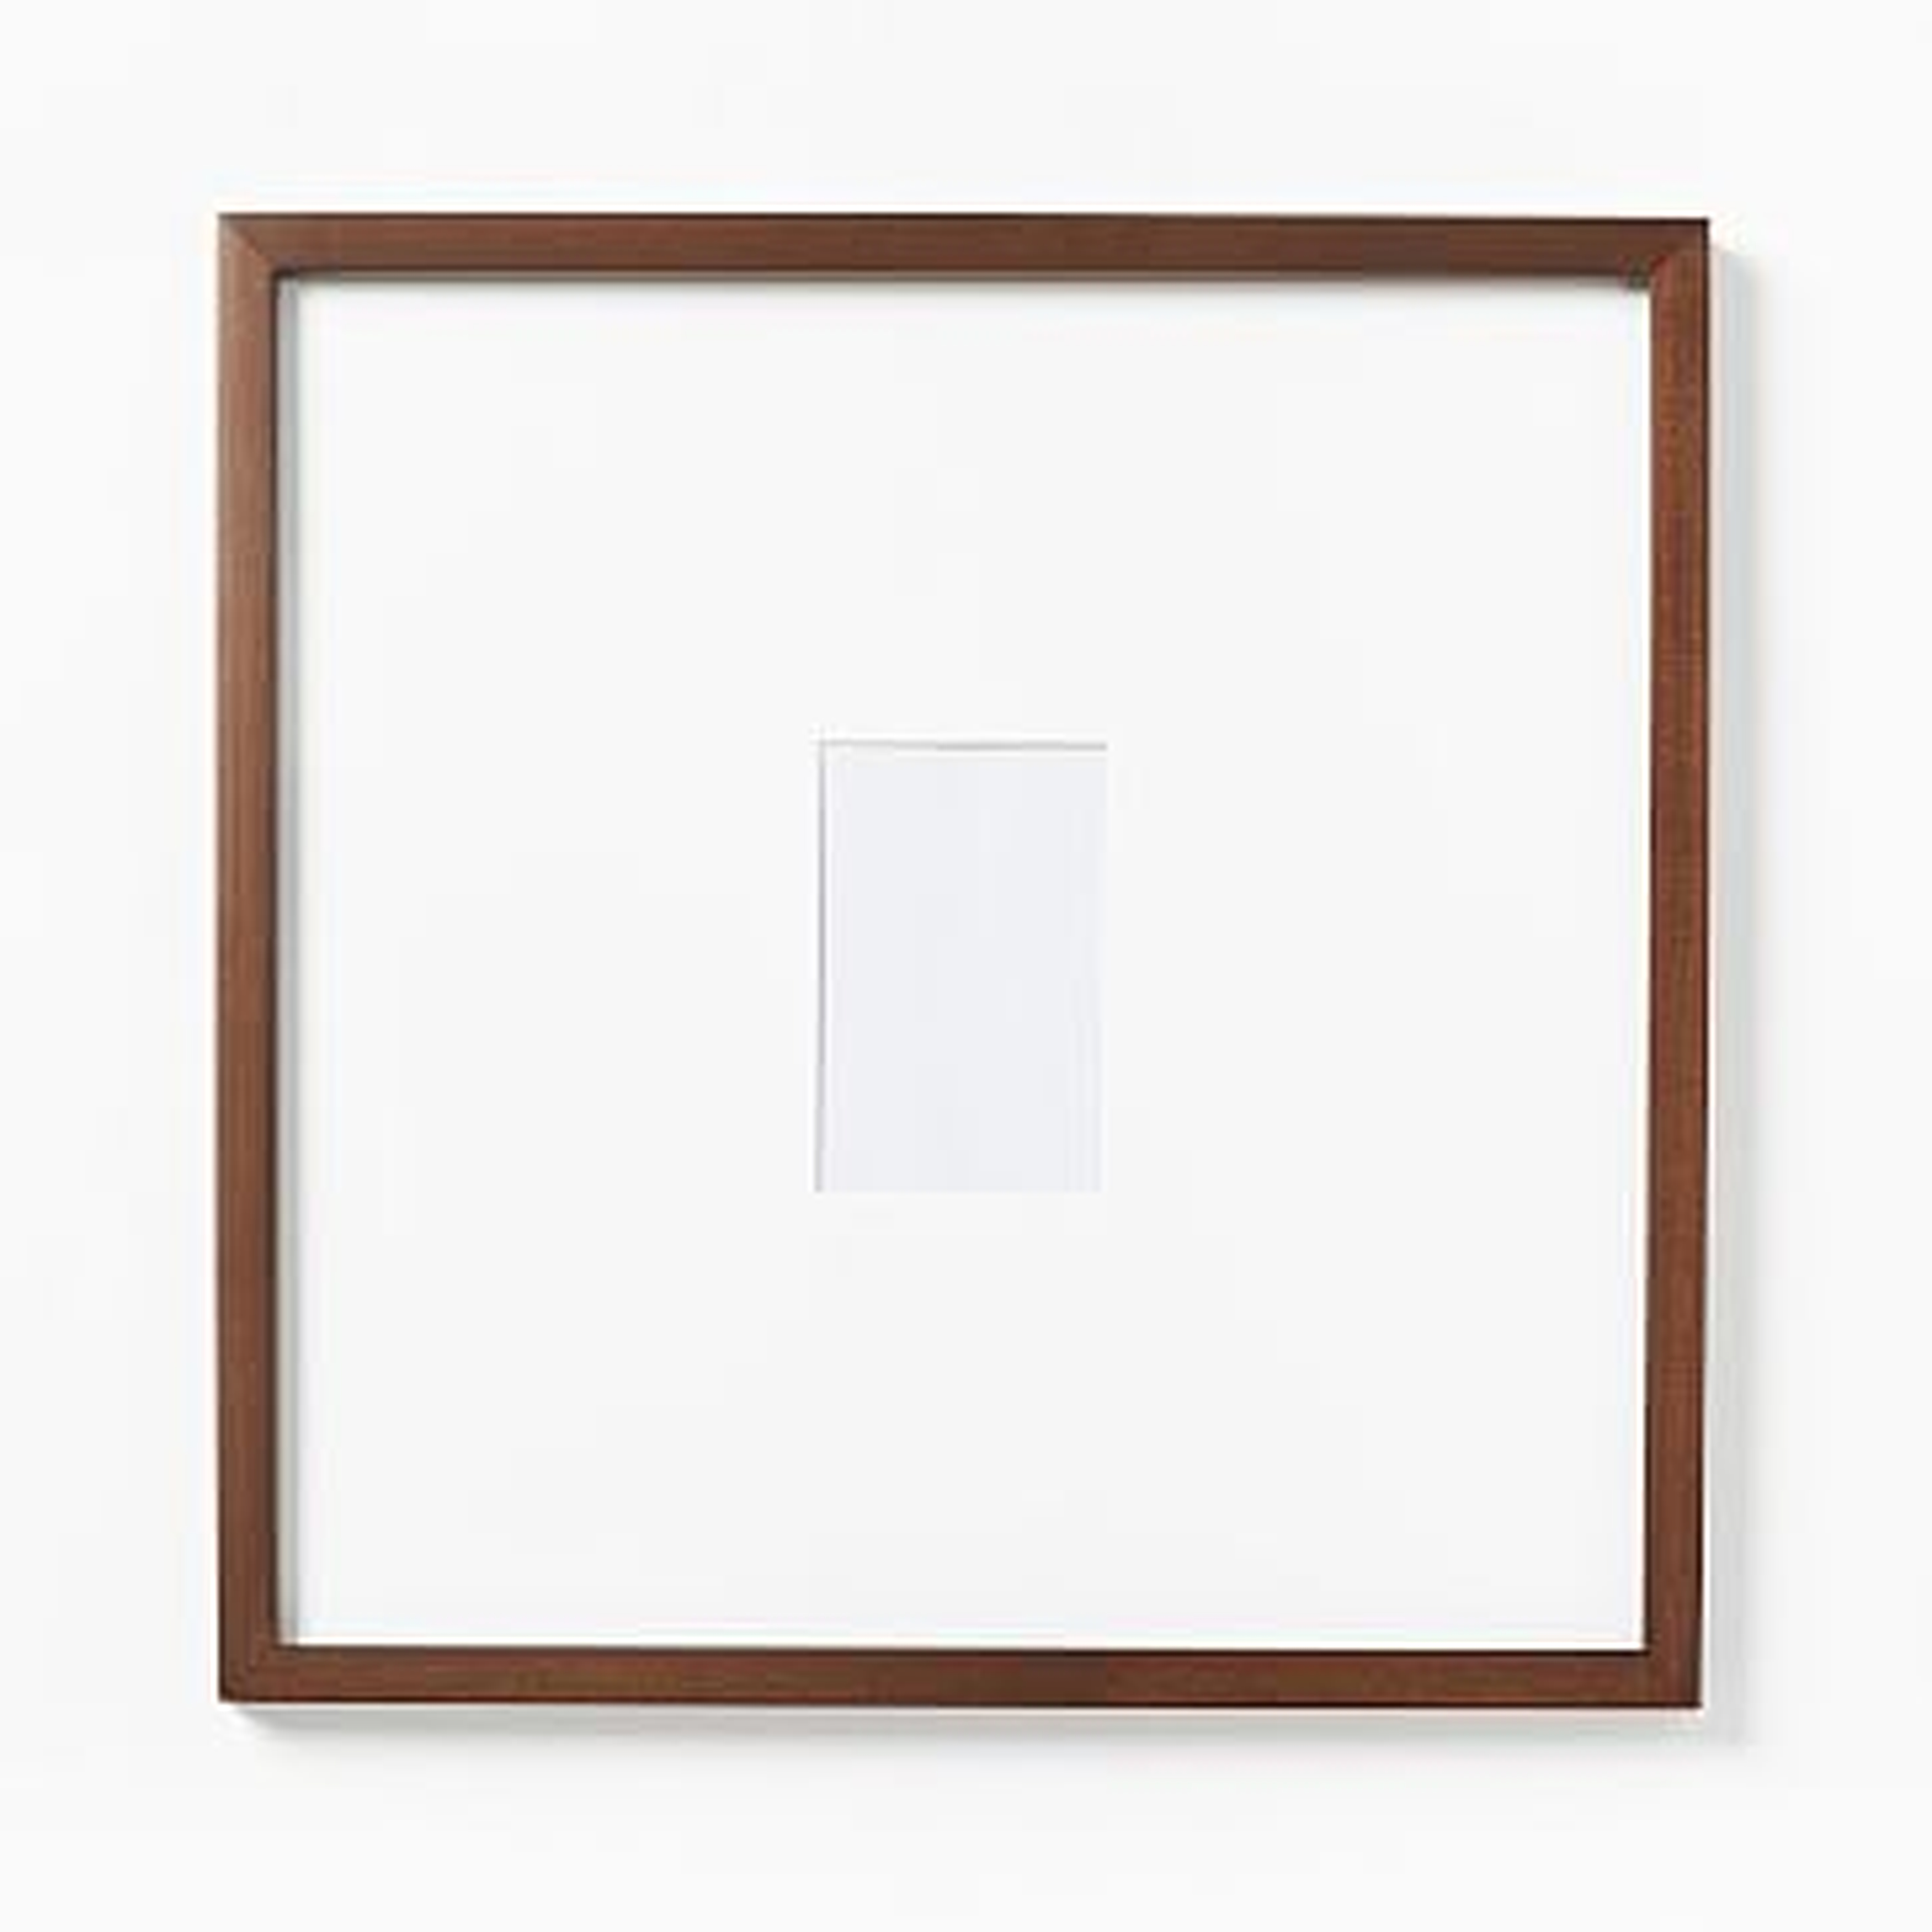 Gallery Frames, Dark Walnut, 4"x6"/17"x17" - West Elm